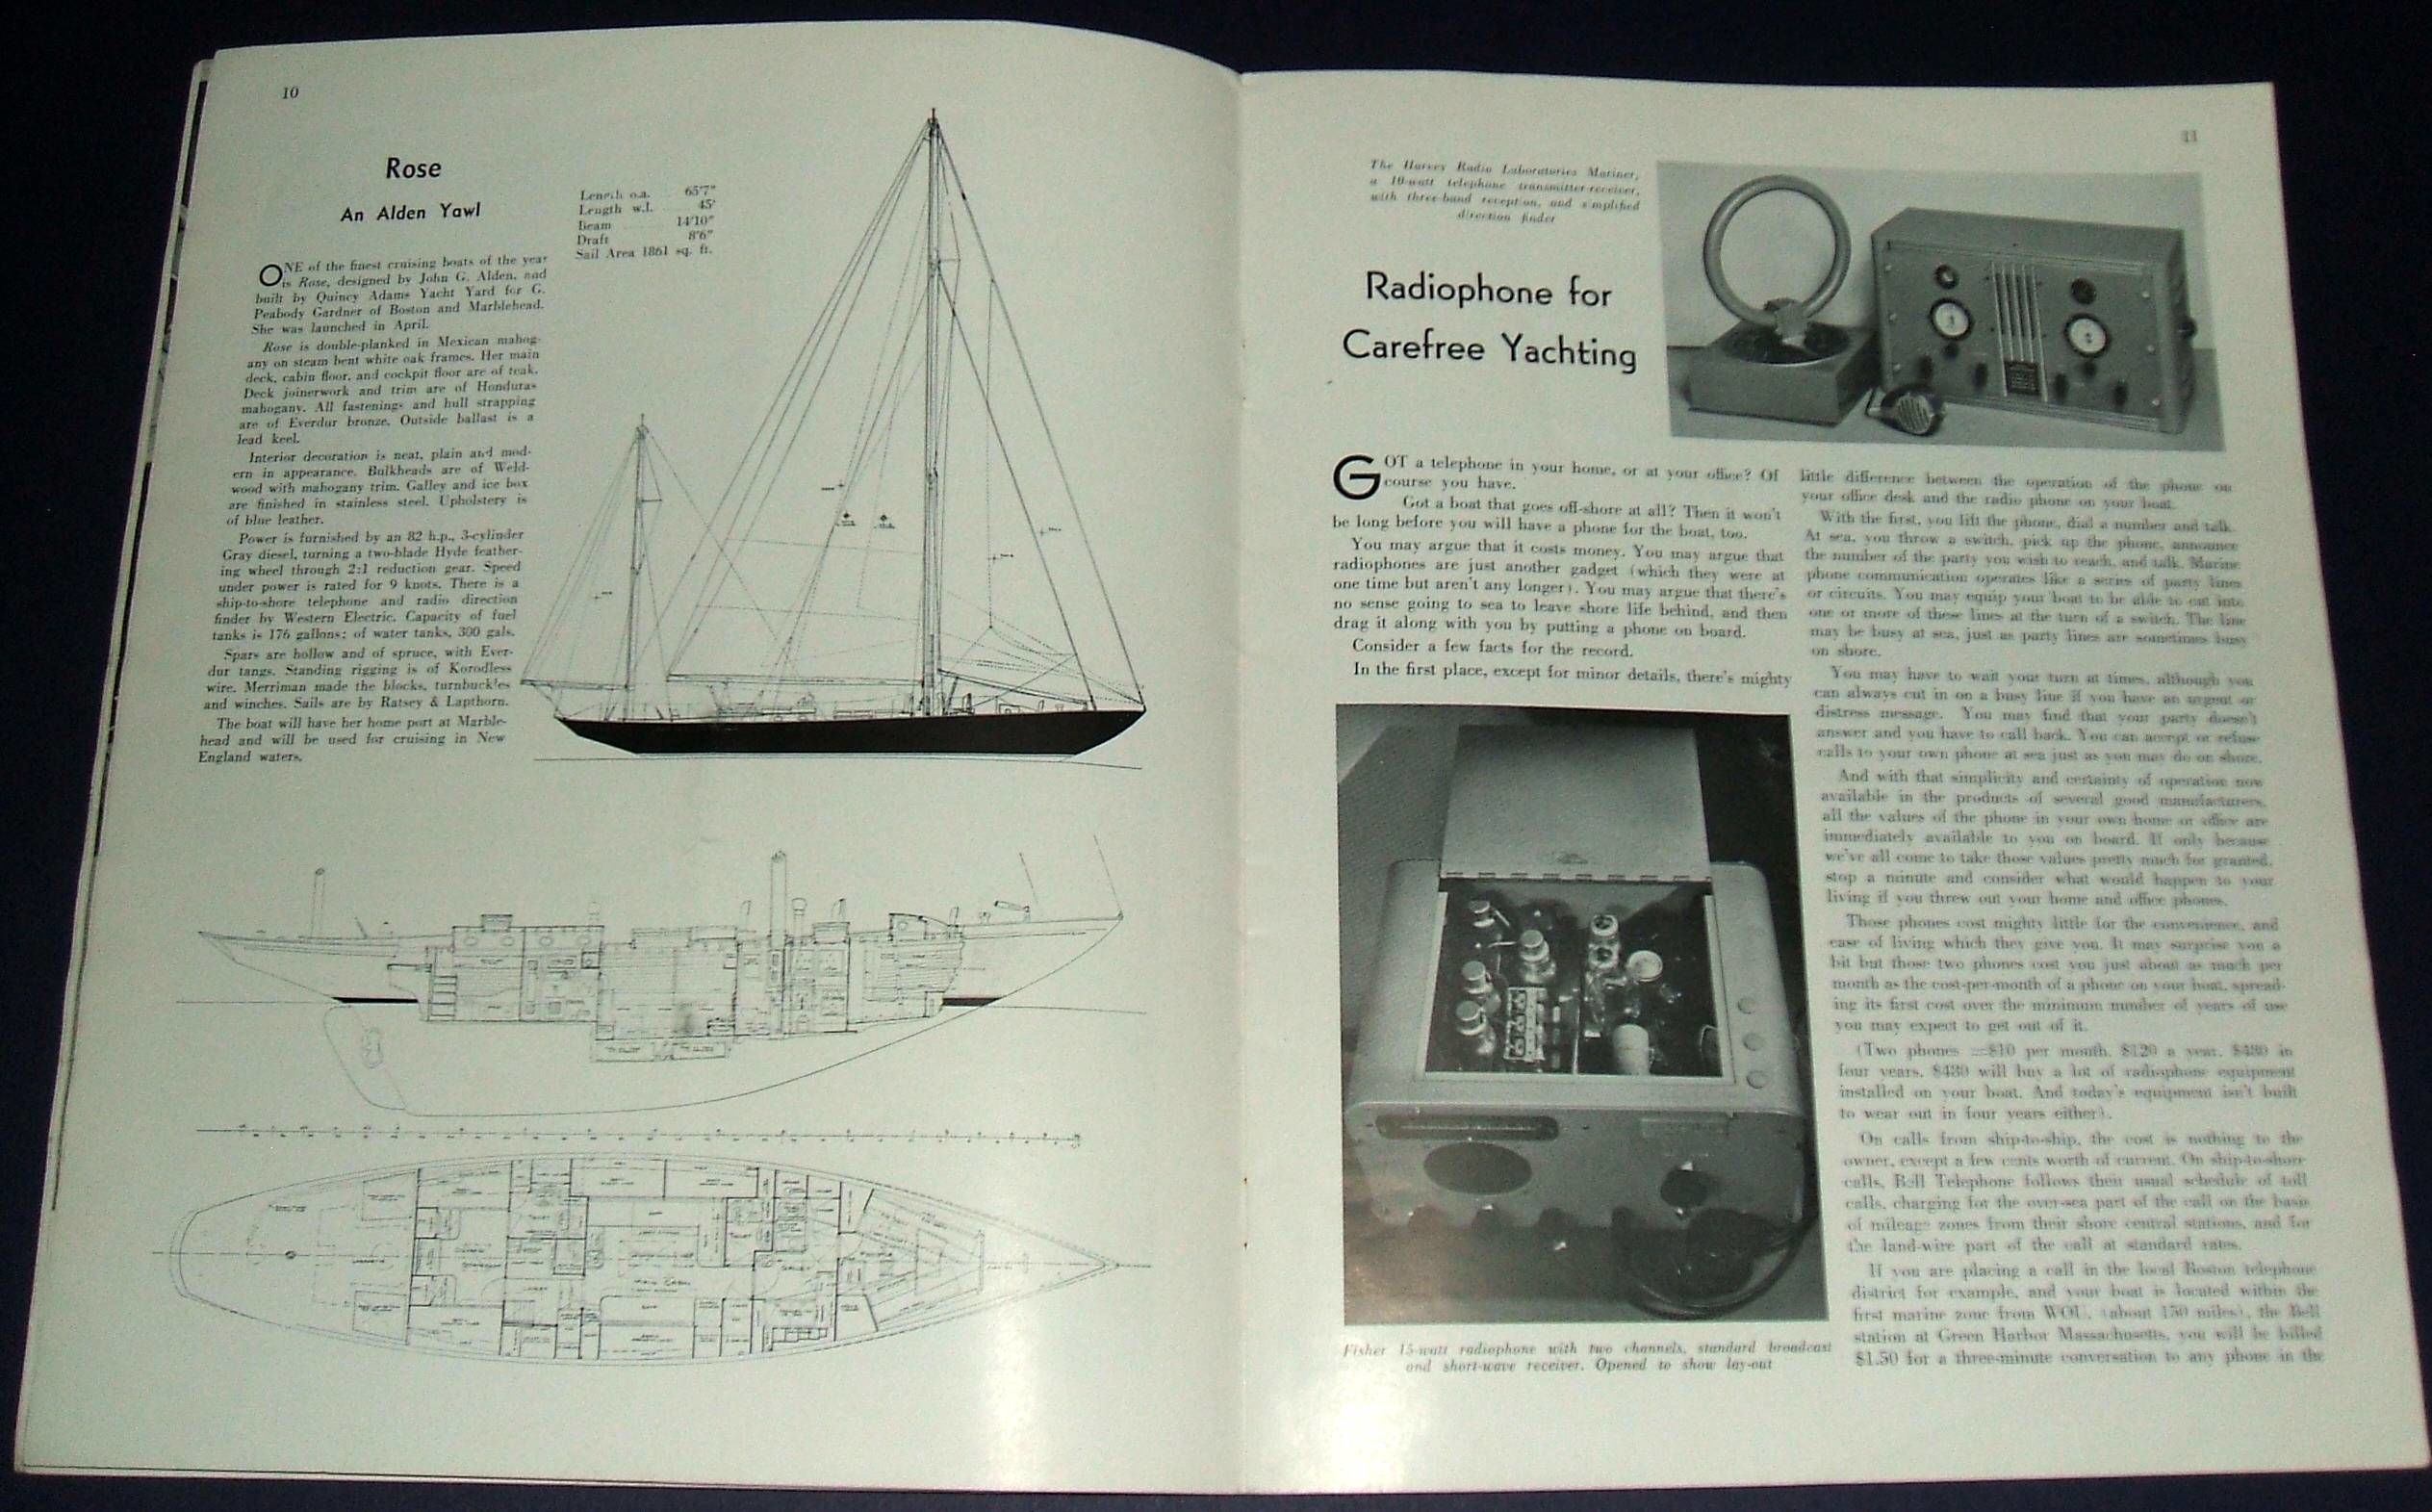 one design & offshore yachtsman magazine